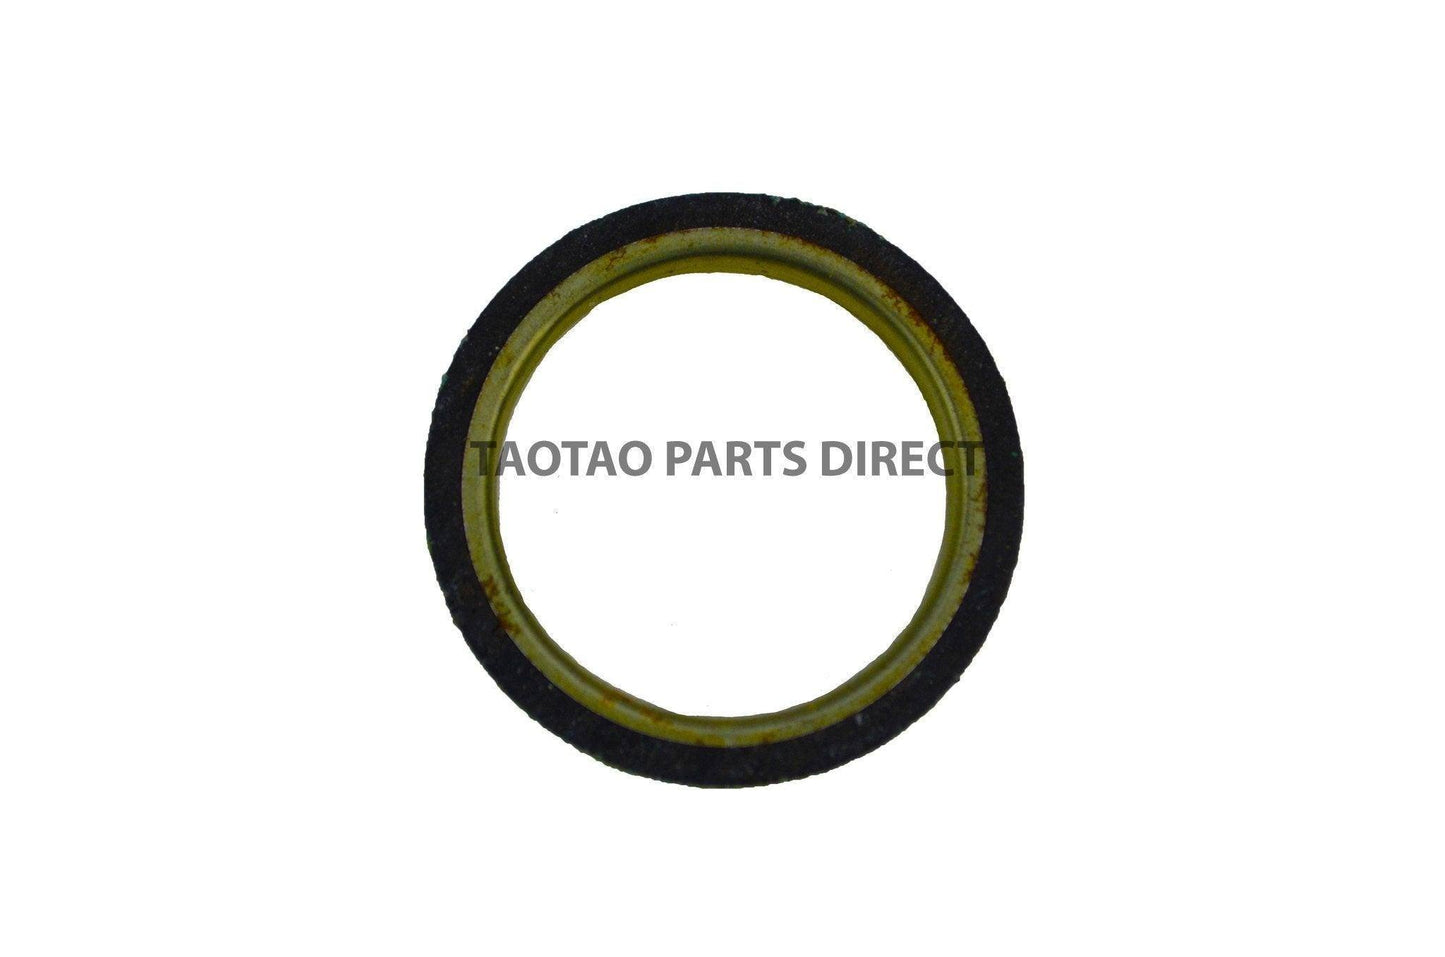 110cc Exhaust Gasket - TaoTao Parts Direct